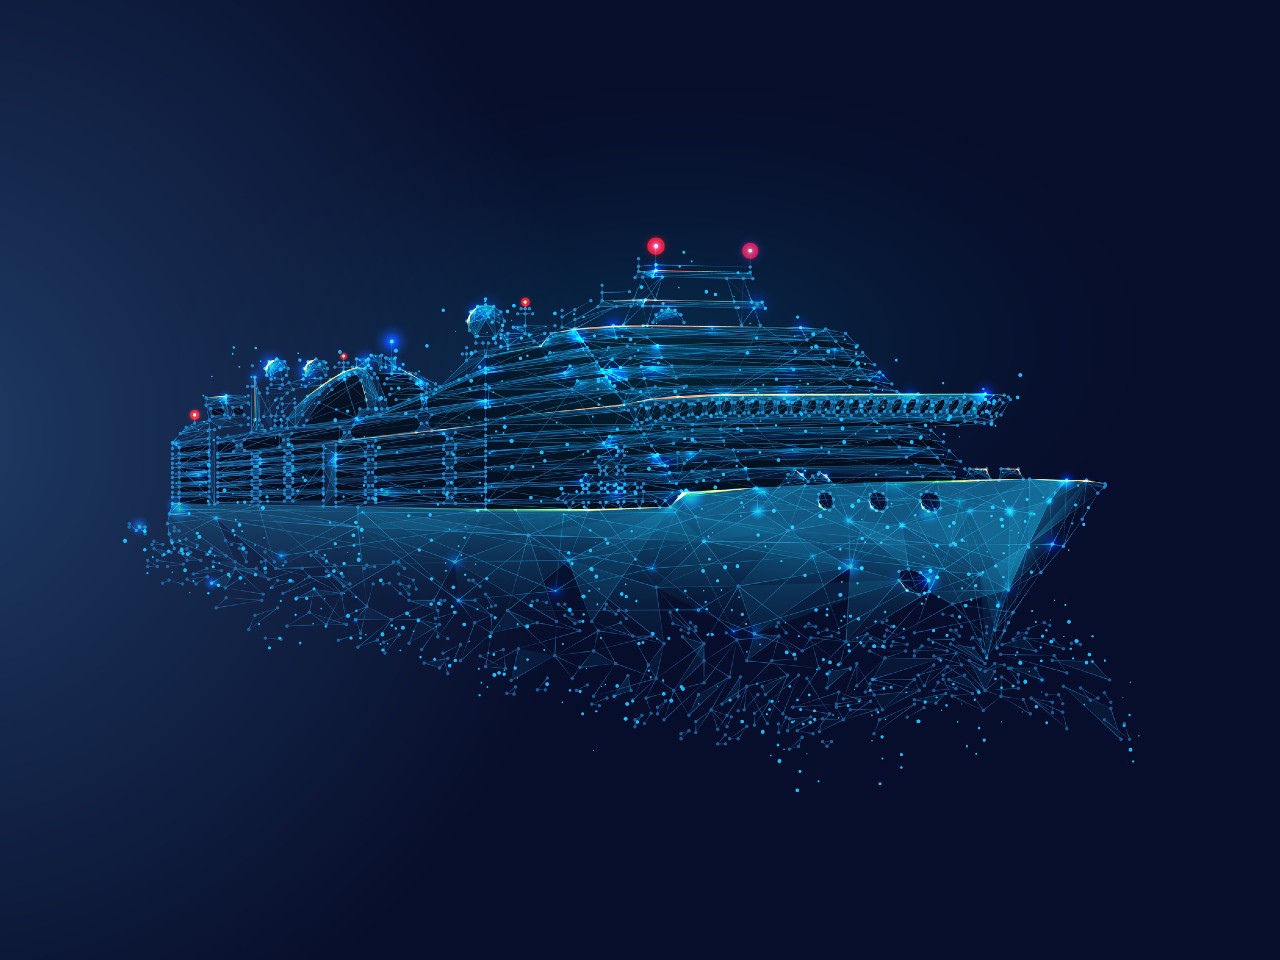 Cruise industry news Jul 2022